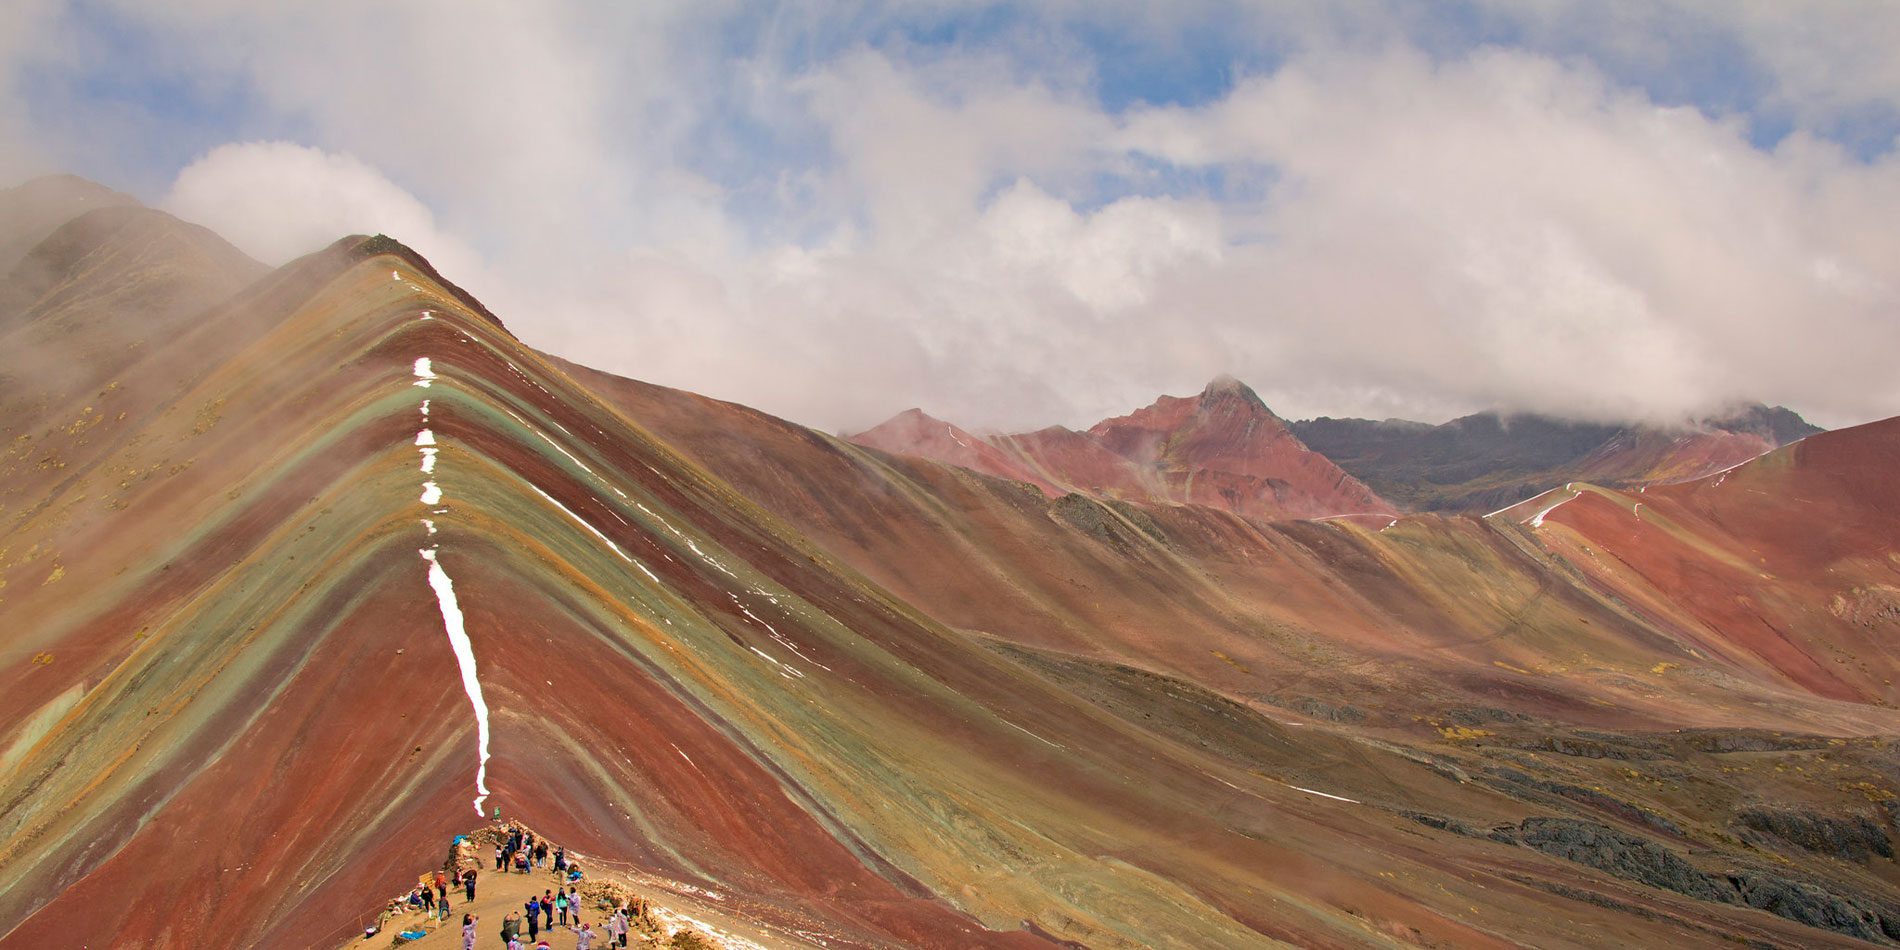 Vinicunca – The Rainbow Mountain Full Day